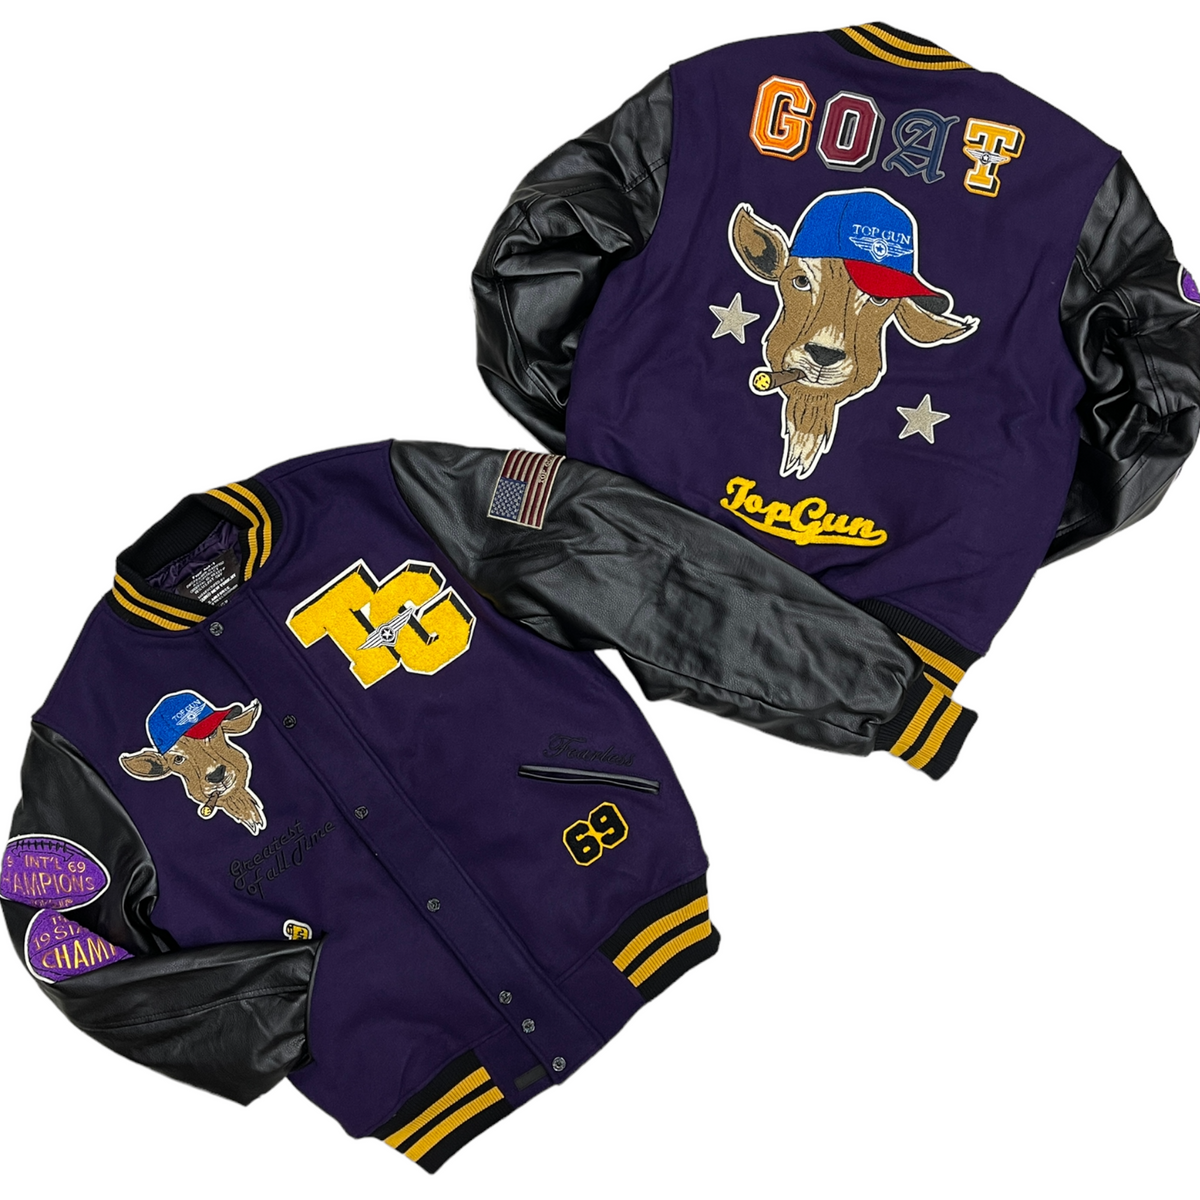 Top gun w sleeve goat Varsity leather Jacket Purple Wool